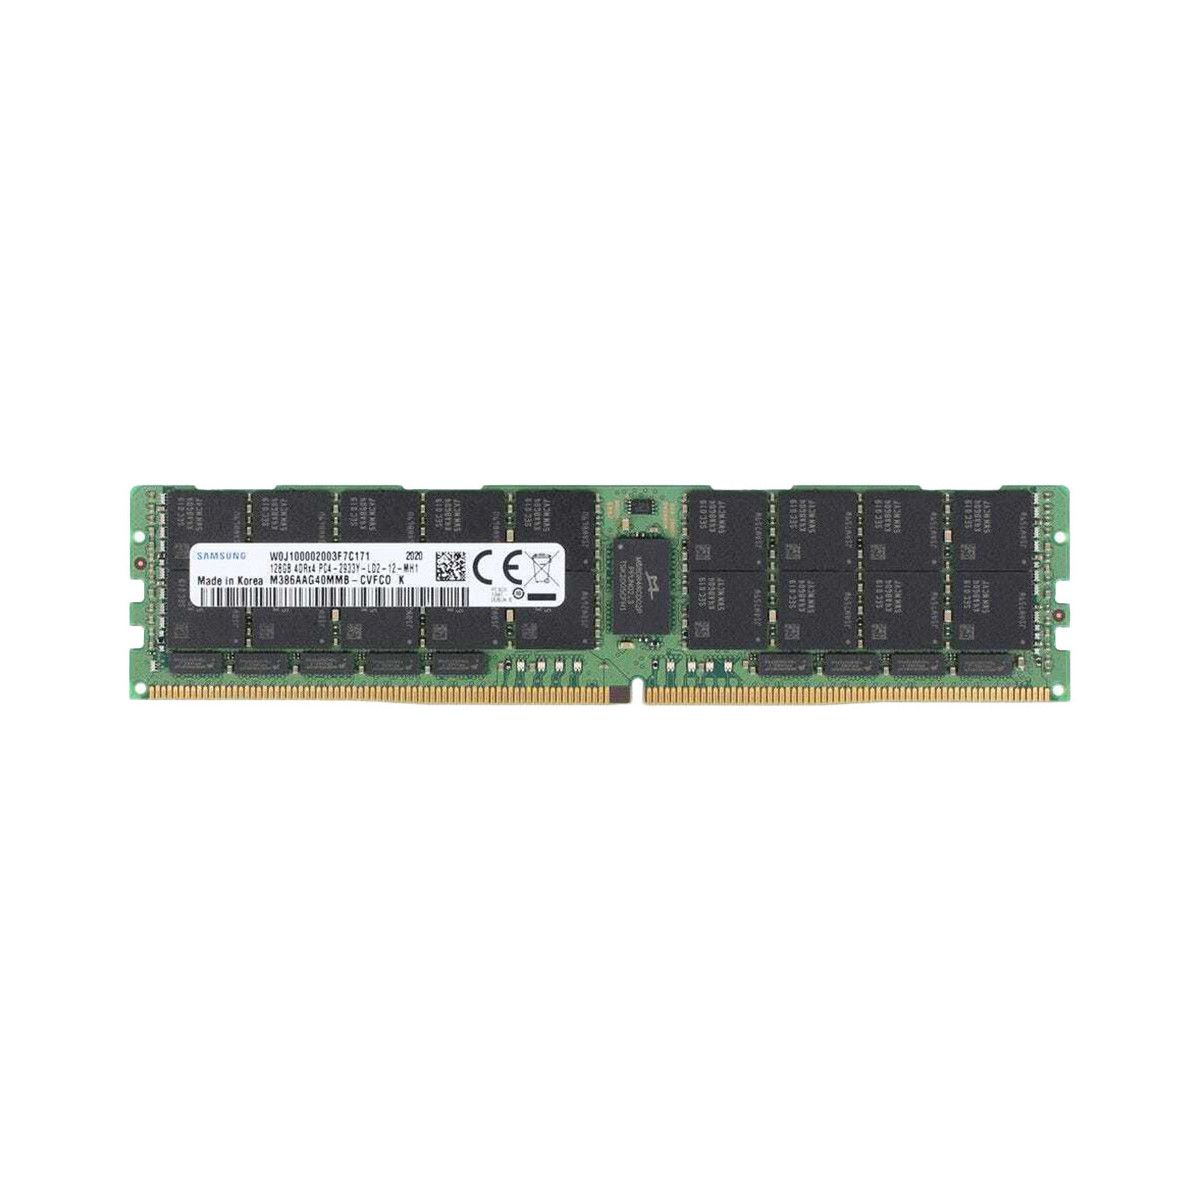 P00928-B21-MS - Memstar 1x 128GB DDR4-2933 LRDIMM PC4-23466U-L - Mem-star Compatible OEM Mémoire 1 - Memstar 